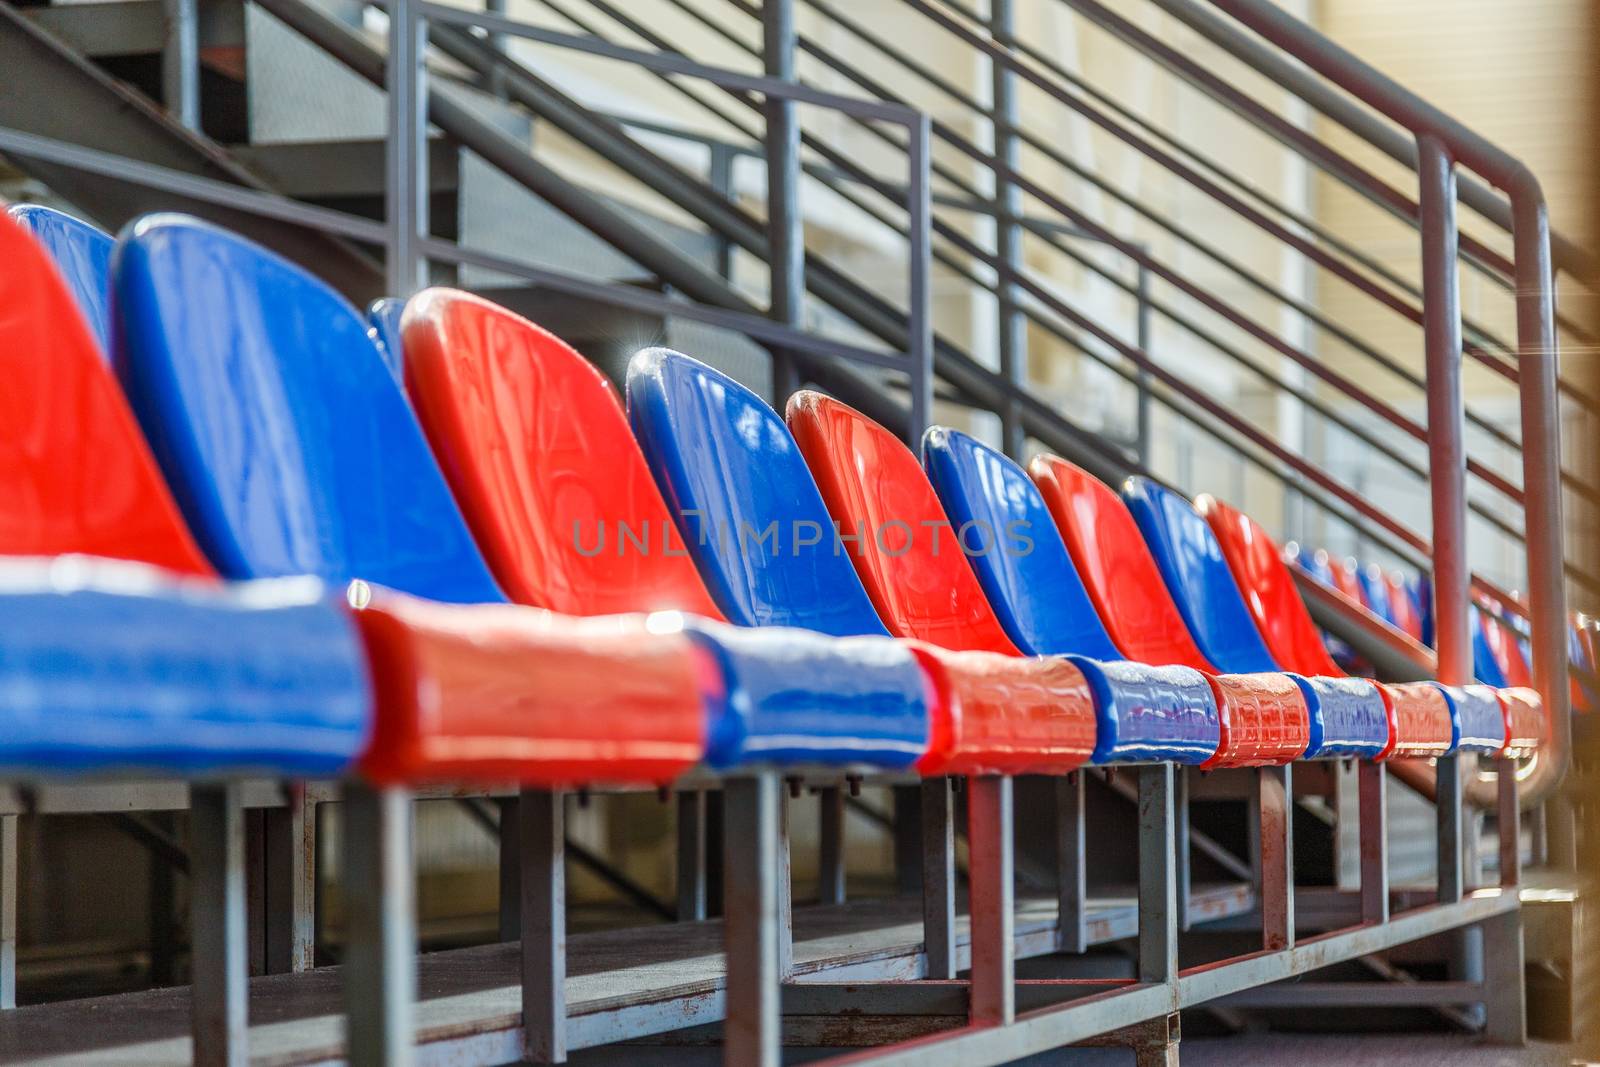 multi-colored plastic seats on the podium in the sports complex